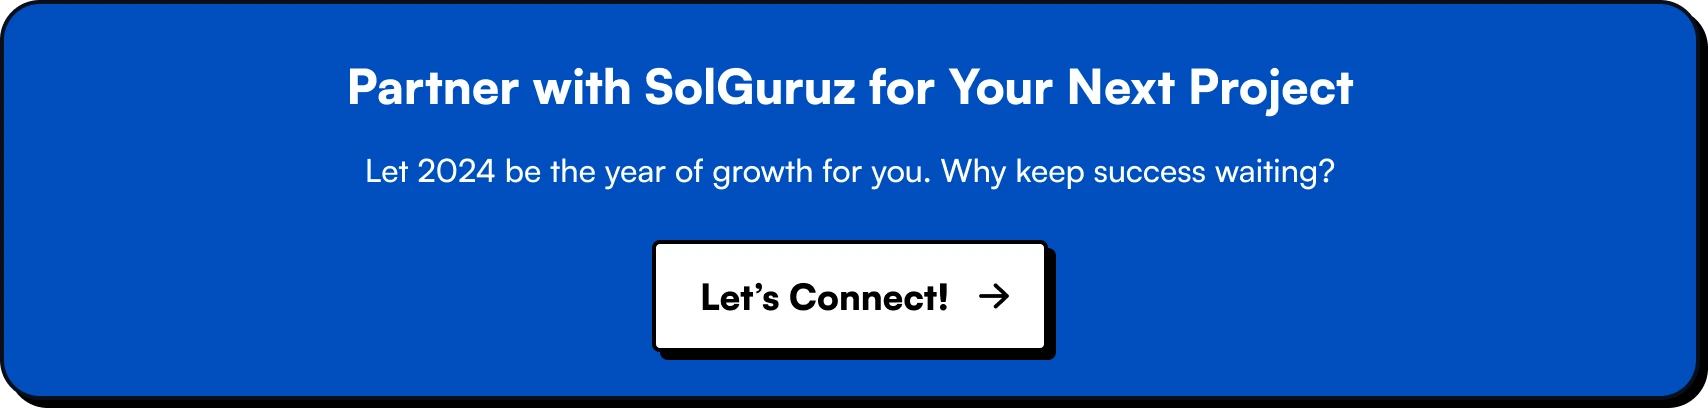 Partner with SolGuruz for Your Next Project